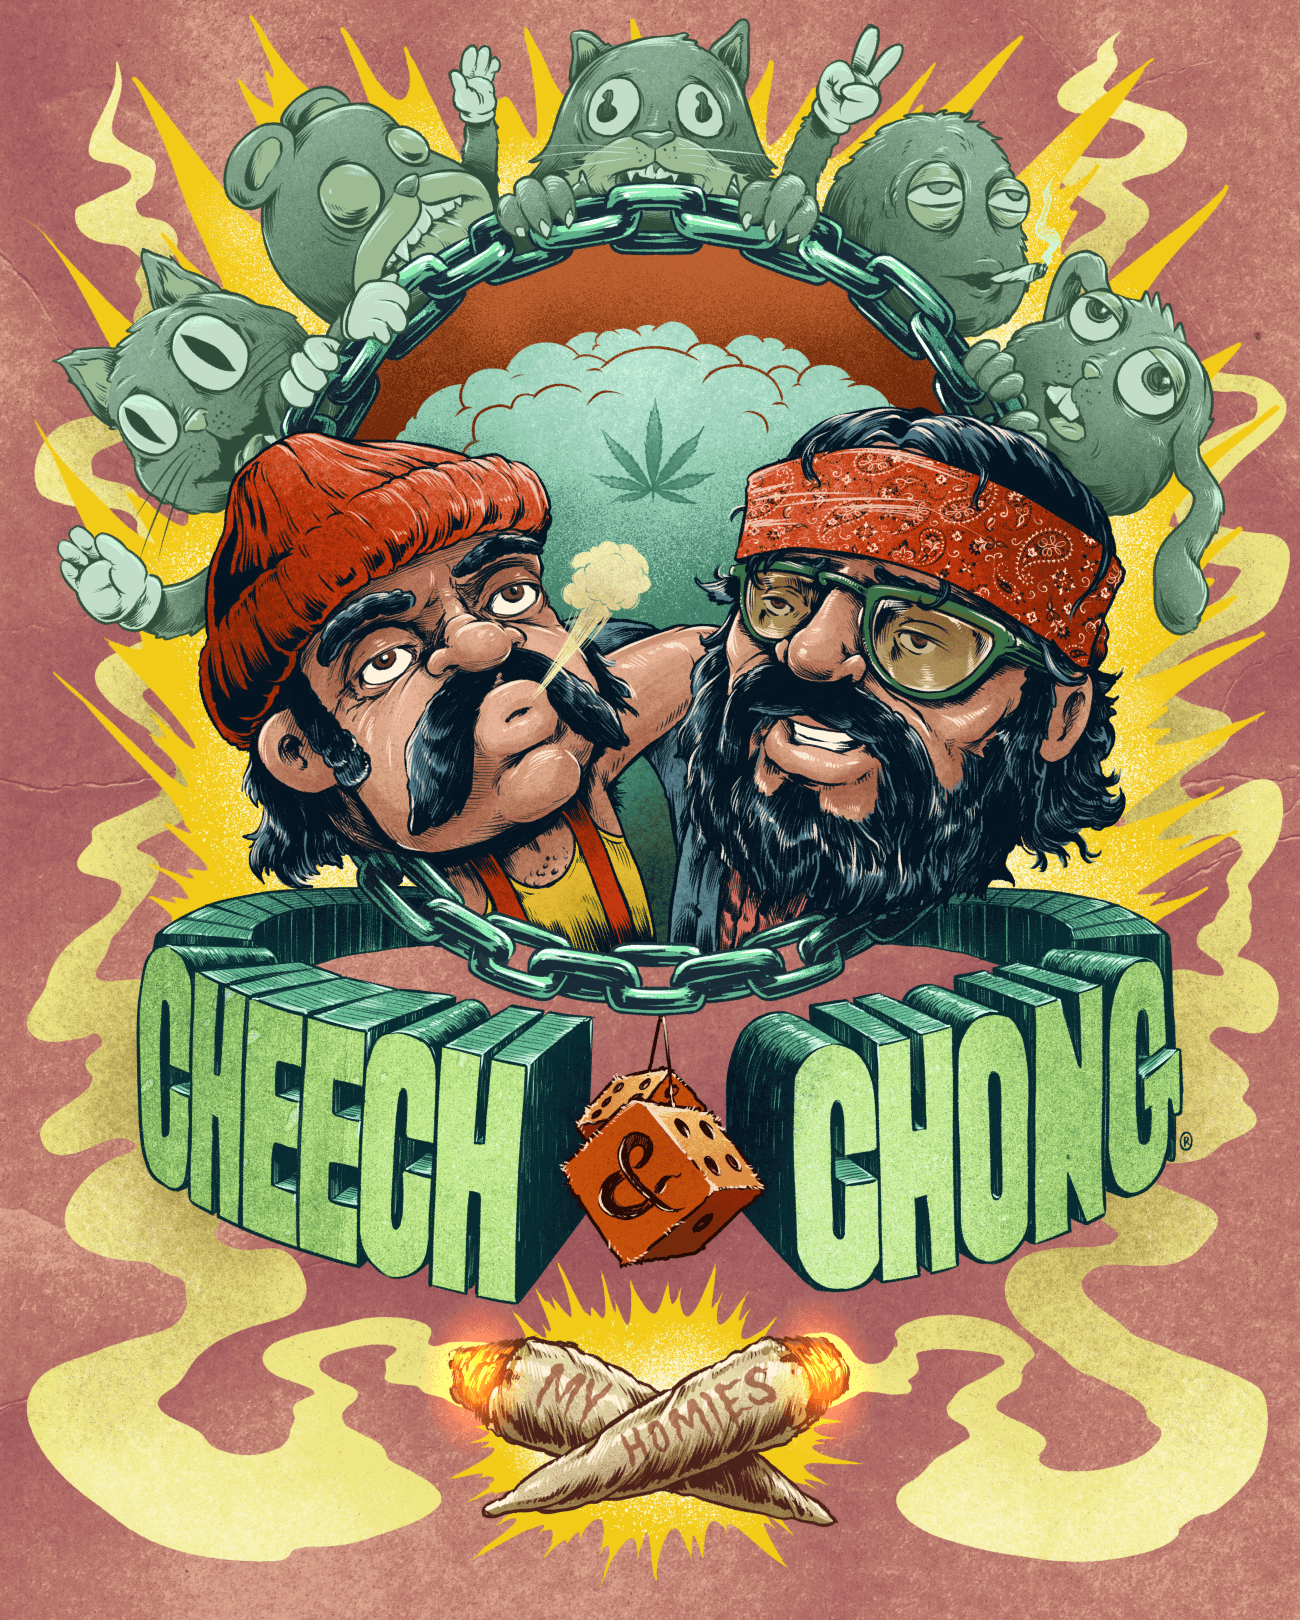 My Homies by Cheech and Chong 420 Artdrop